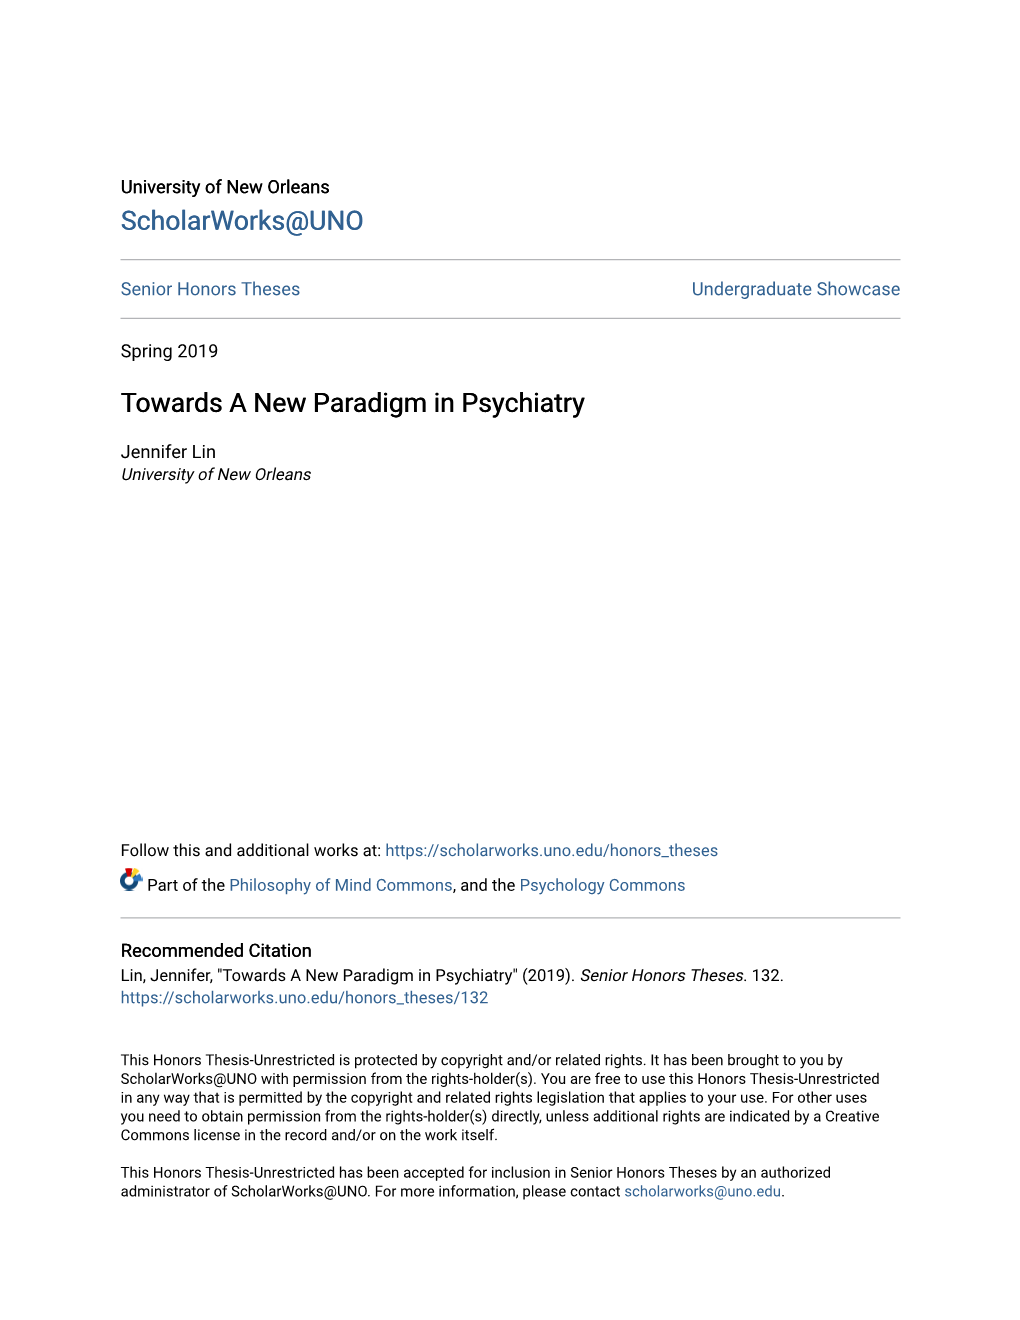 Towards a New Paradigm in Psychiatry